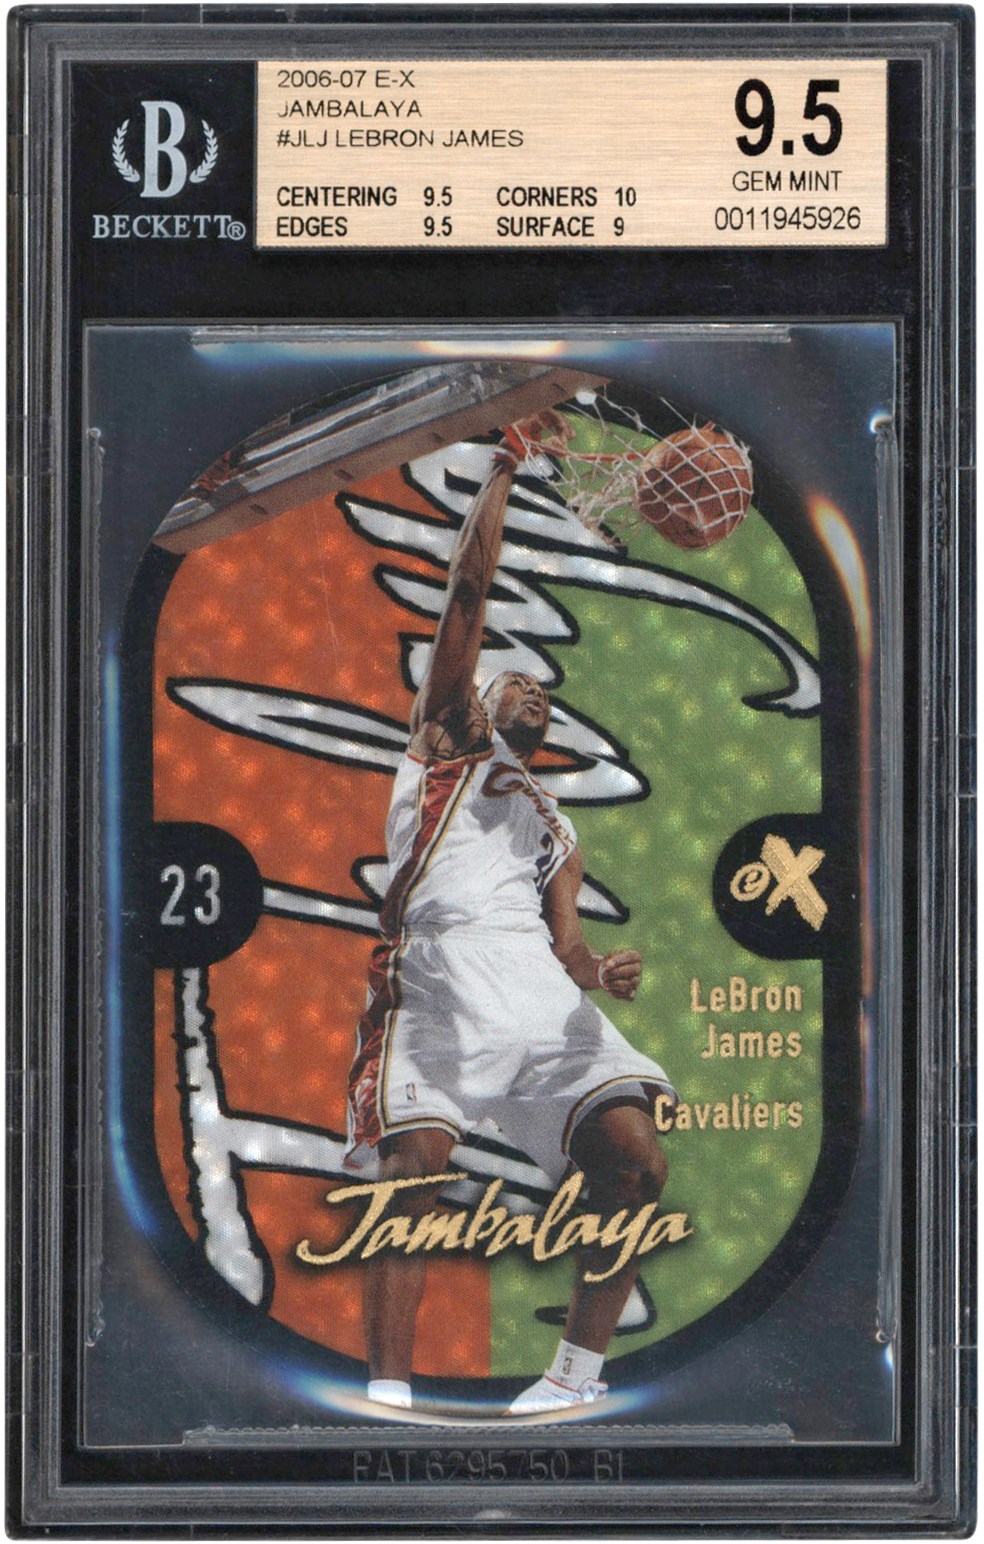 Basketball Cards - 006-07 E-X Jambalaya #JLJ LeBron James BGS GEM MINT 9.5